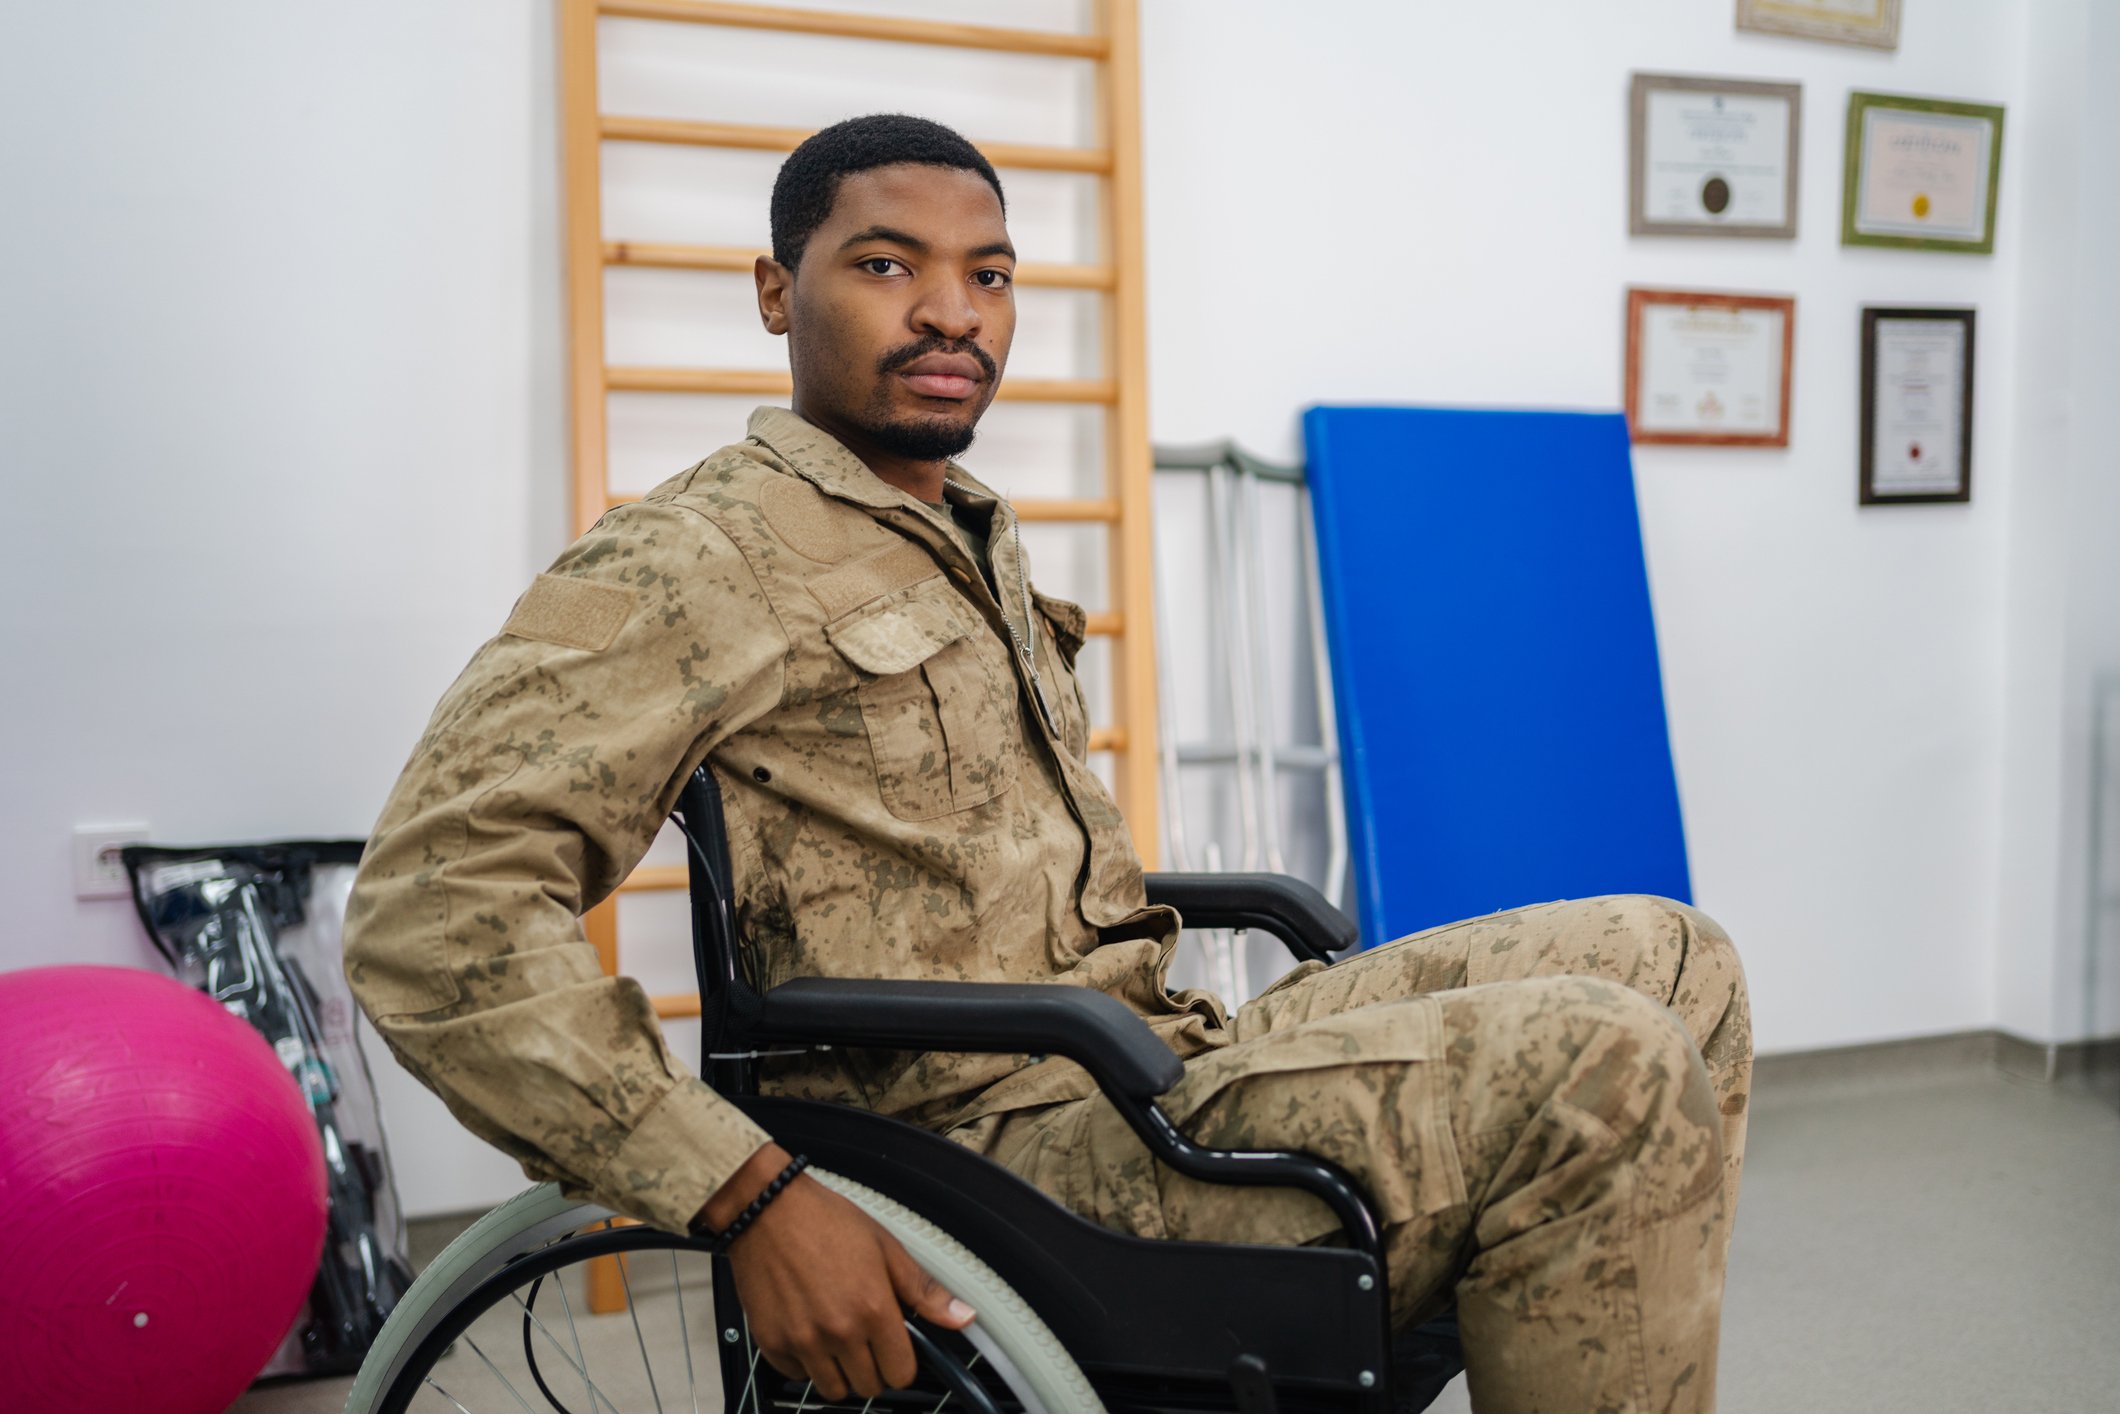 Black veterans less able to manage chronic pain via telehealth services